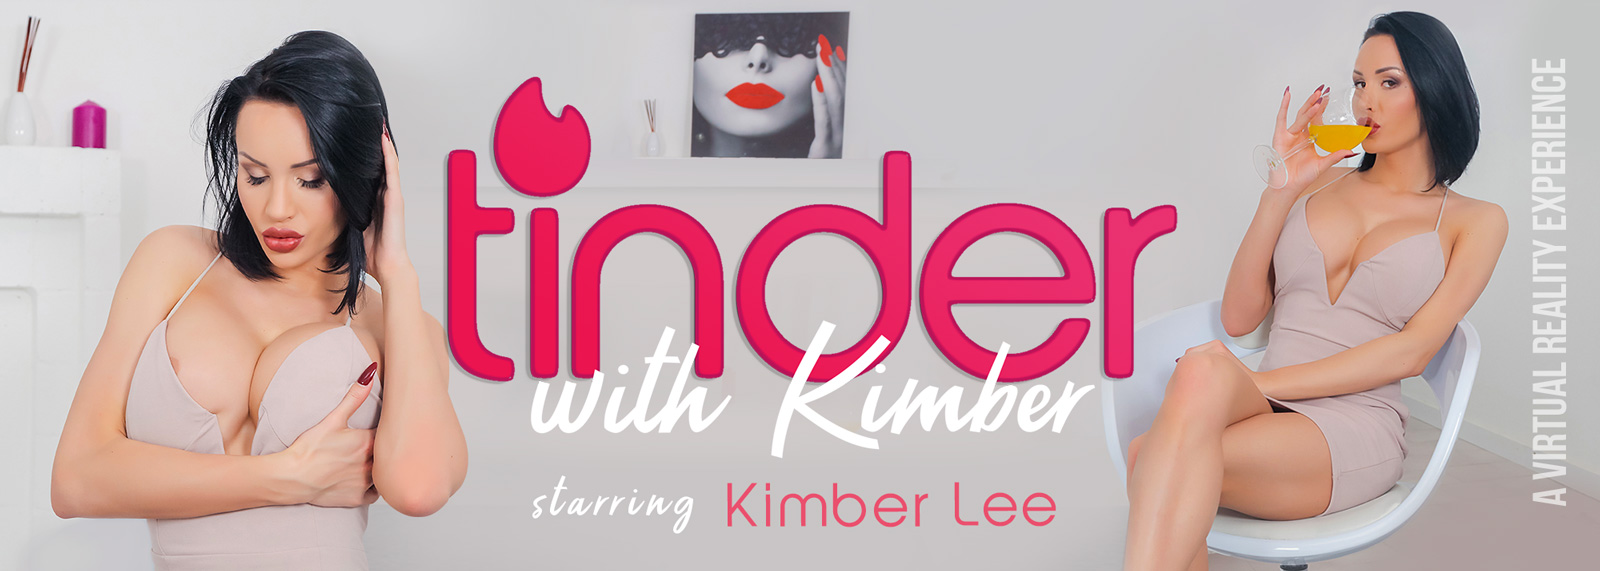 Tinder With Kimber - VR Porn Video, Starring Kimber Lee VR